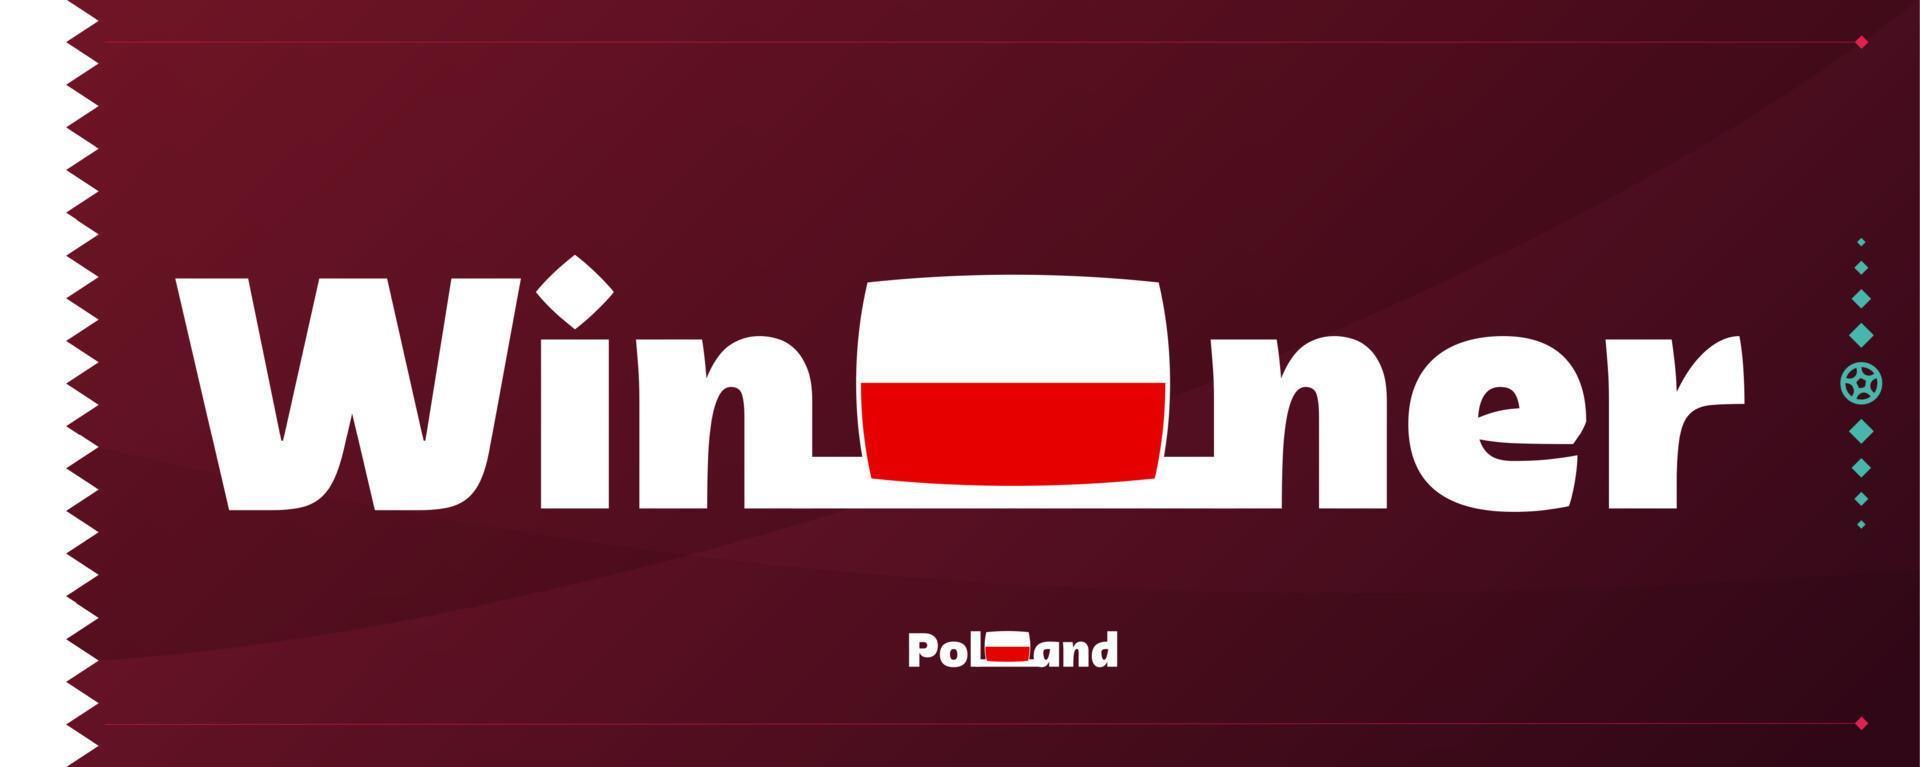 poland flag with winner slogan on football background. World Football 2022 tournament vector illustration